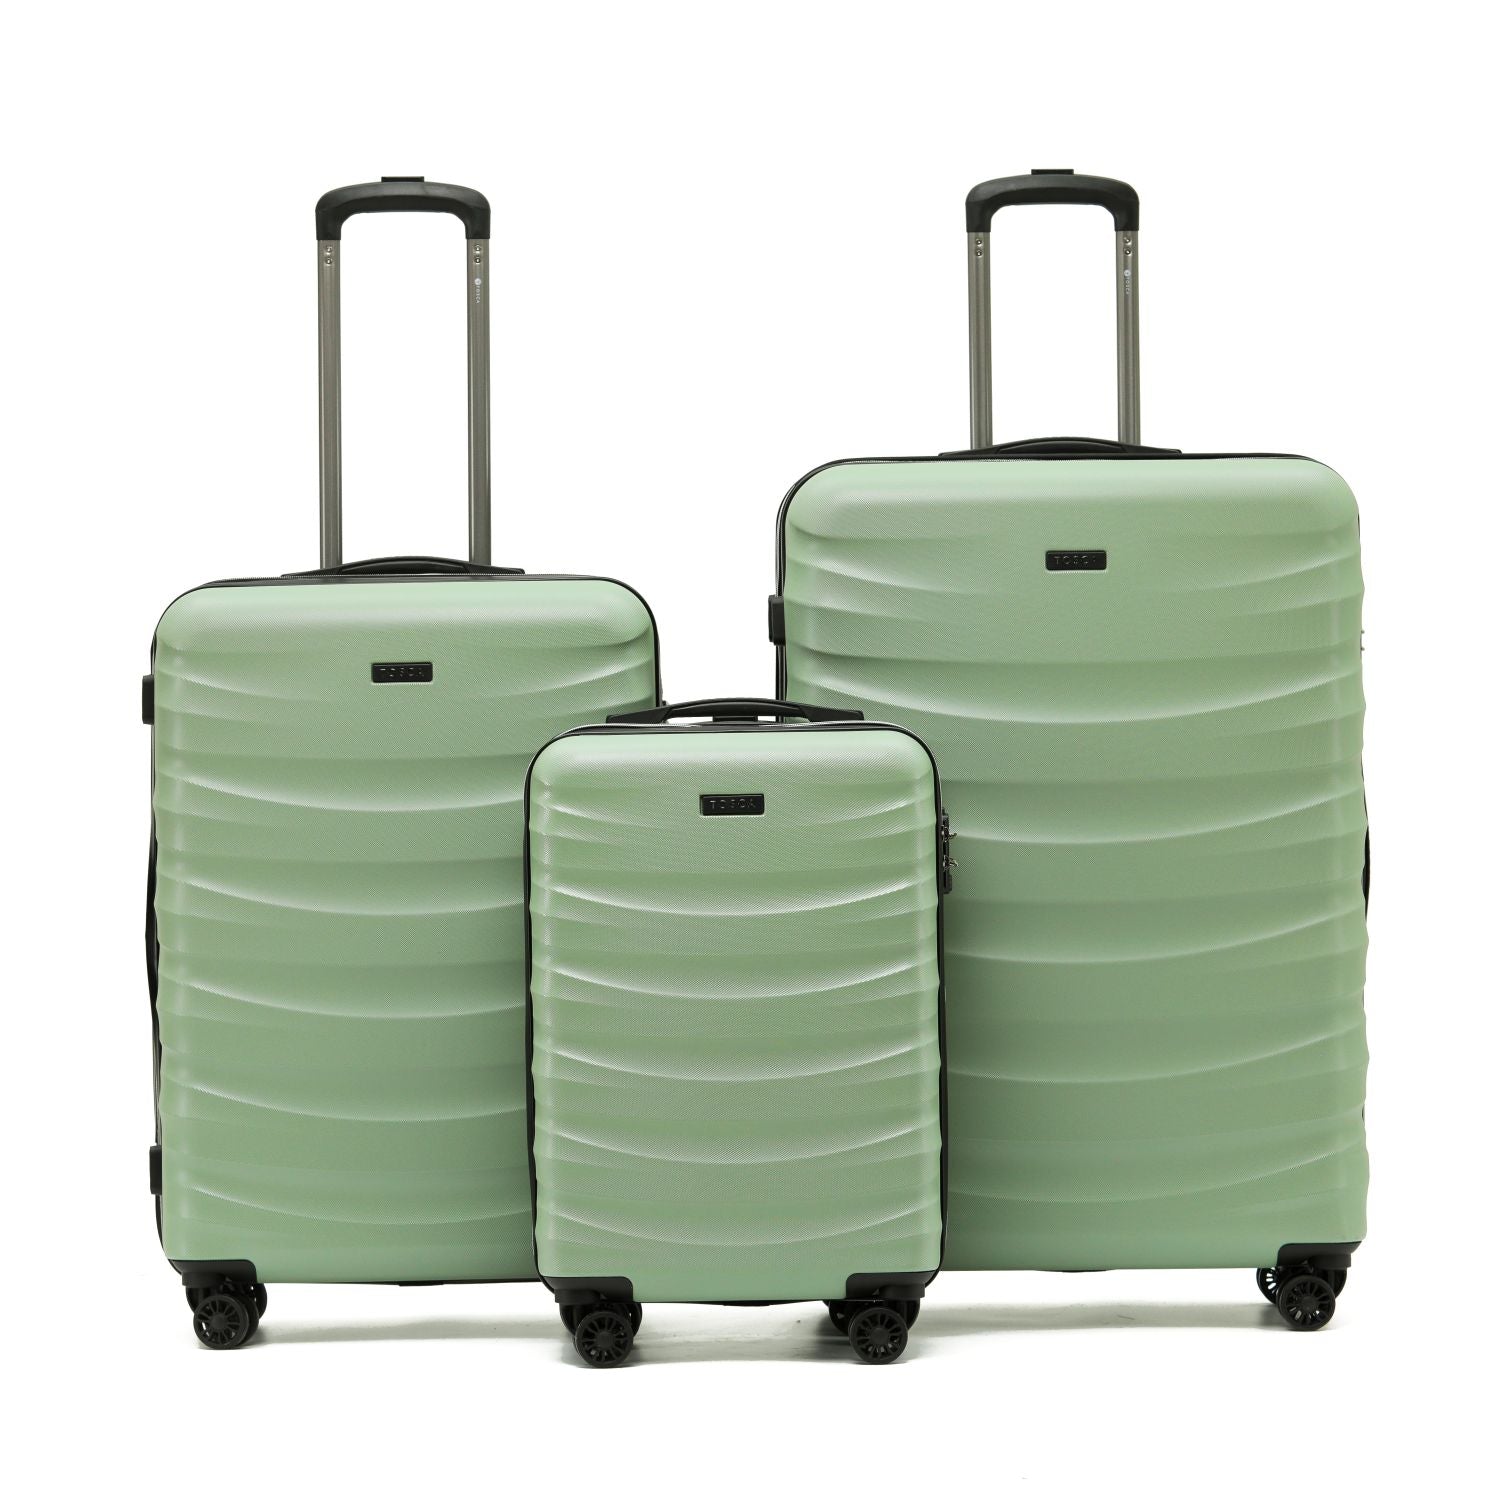 Tosca - Intersteller set of 3 suitcases - Oil Green-2